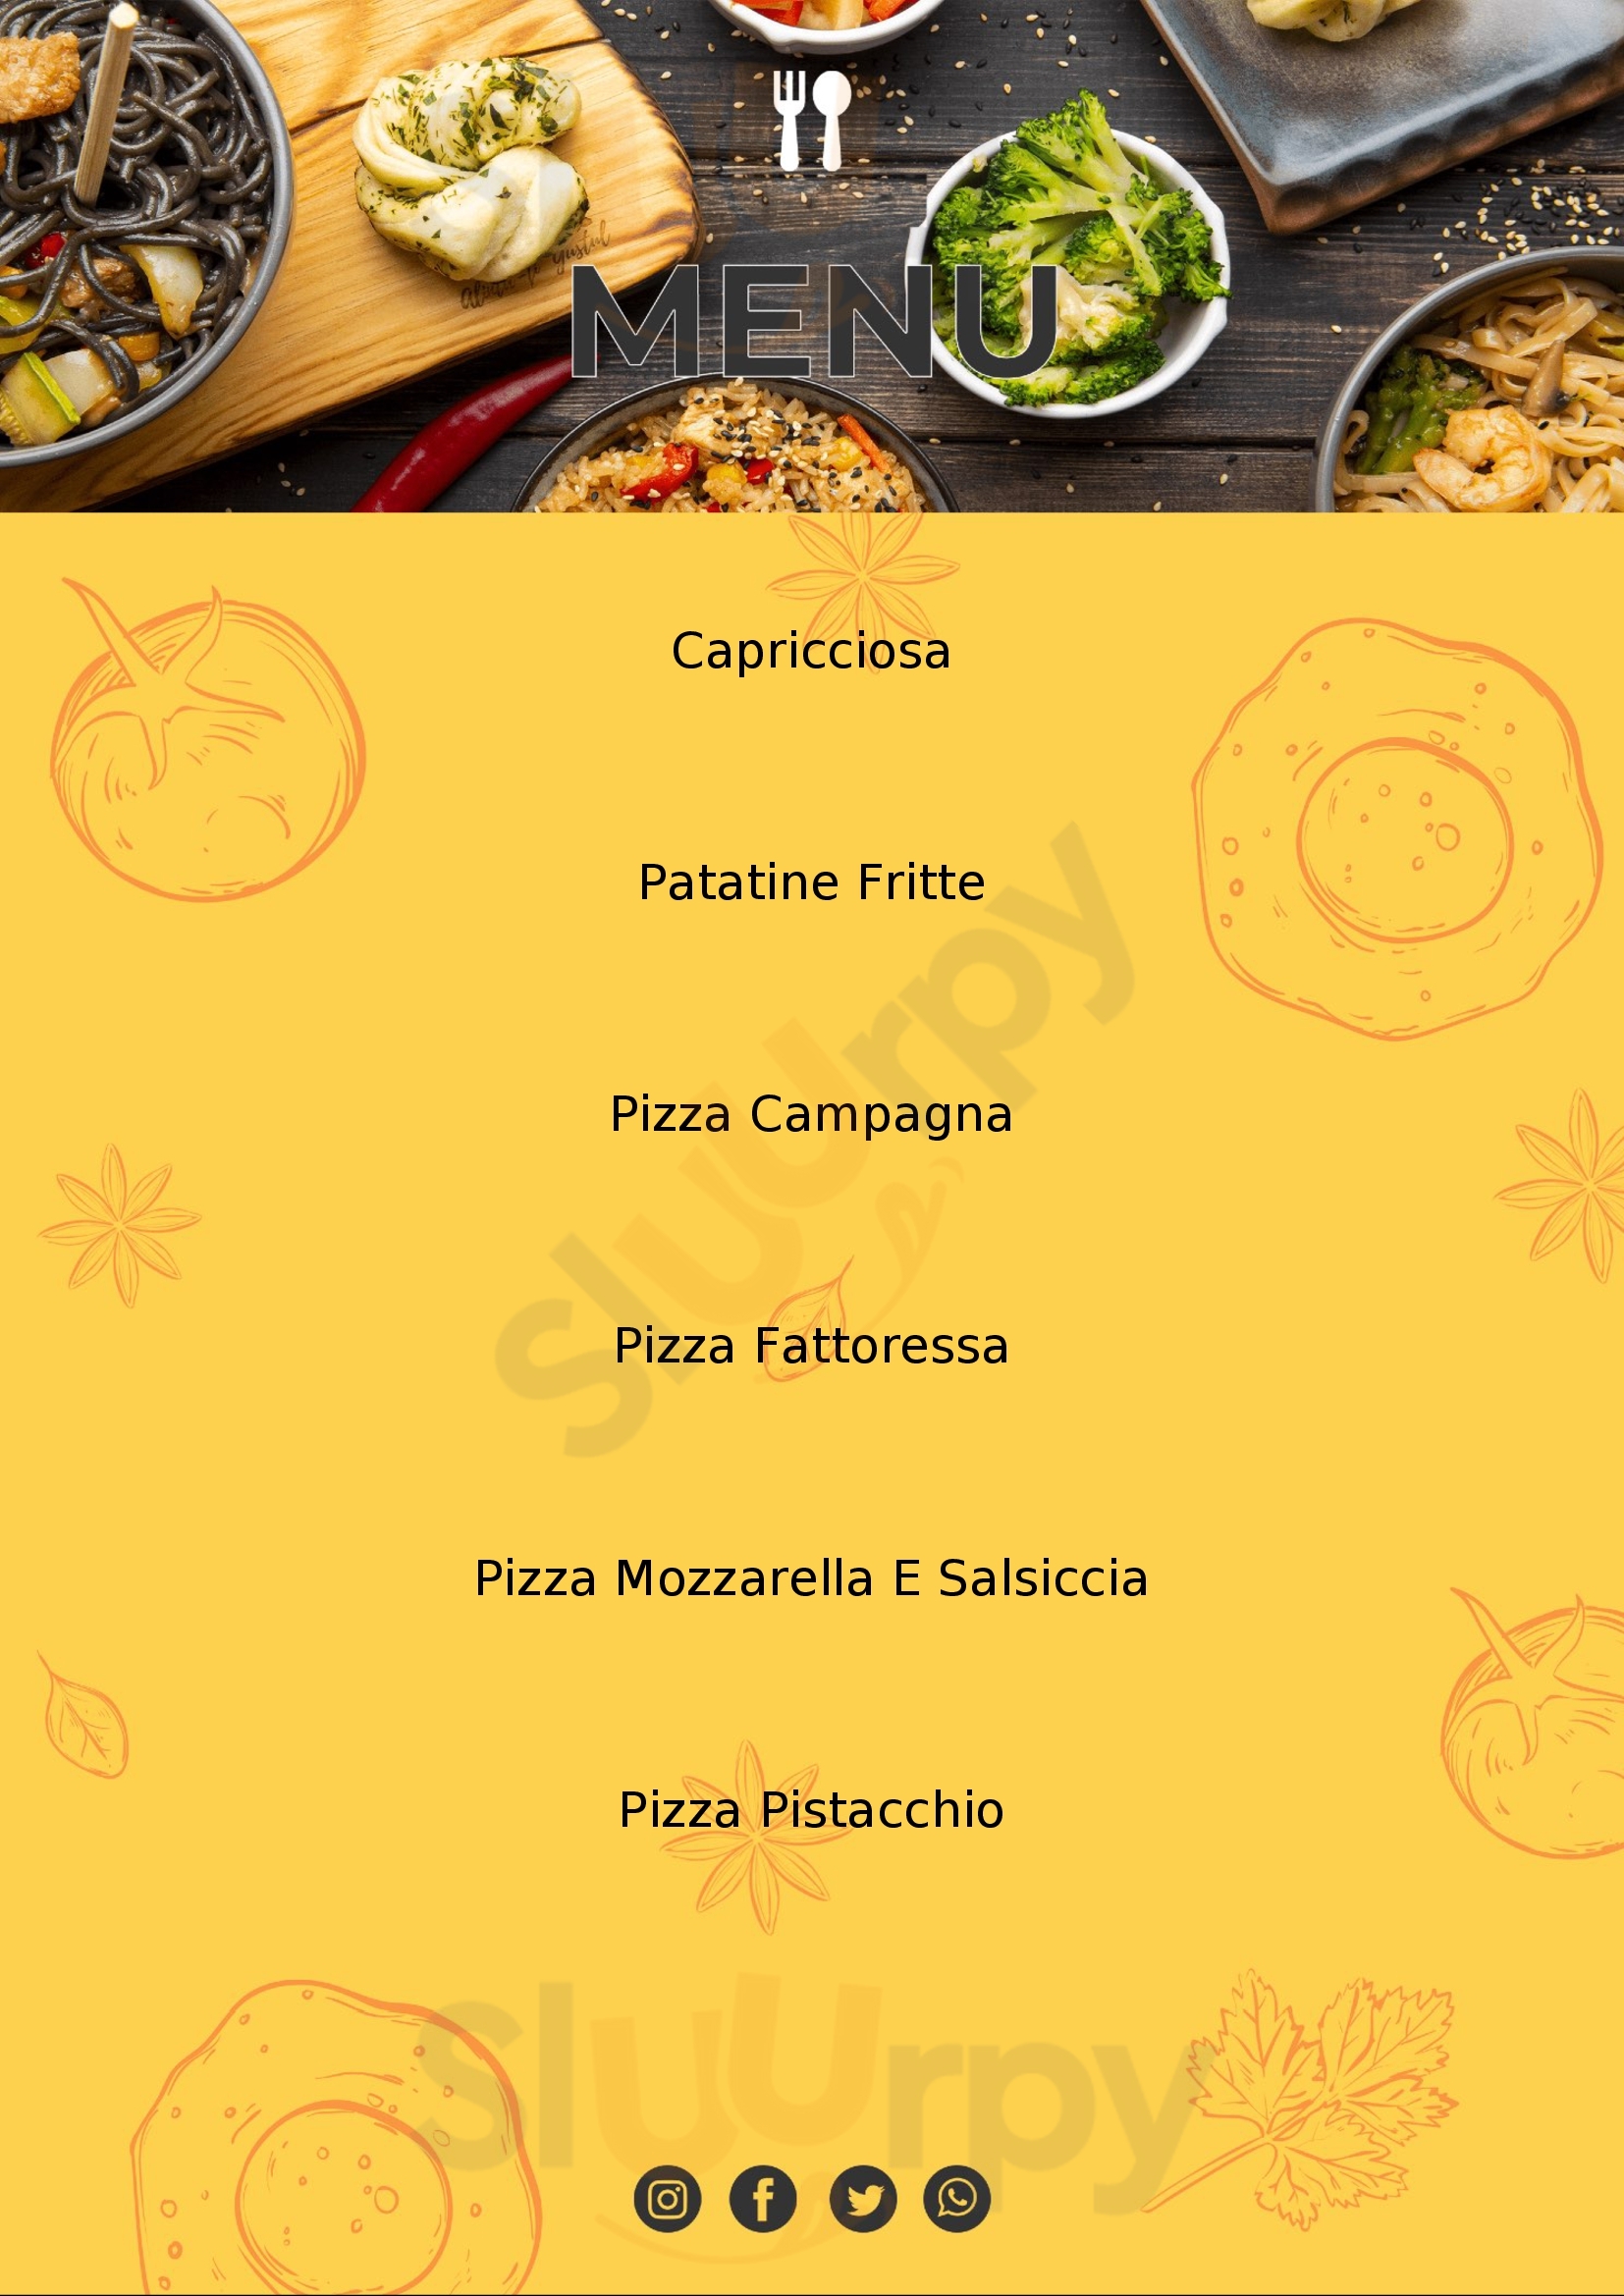 Pizzeria La Cuccagna Acireale menù 1 pagina